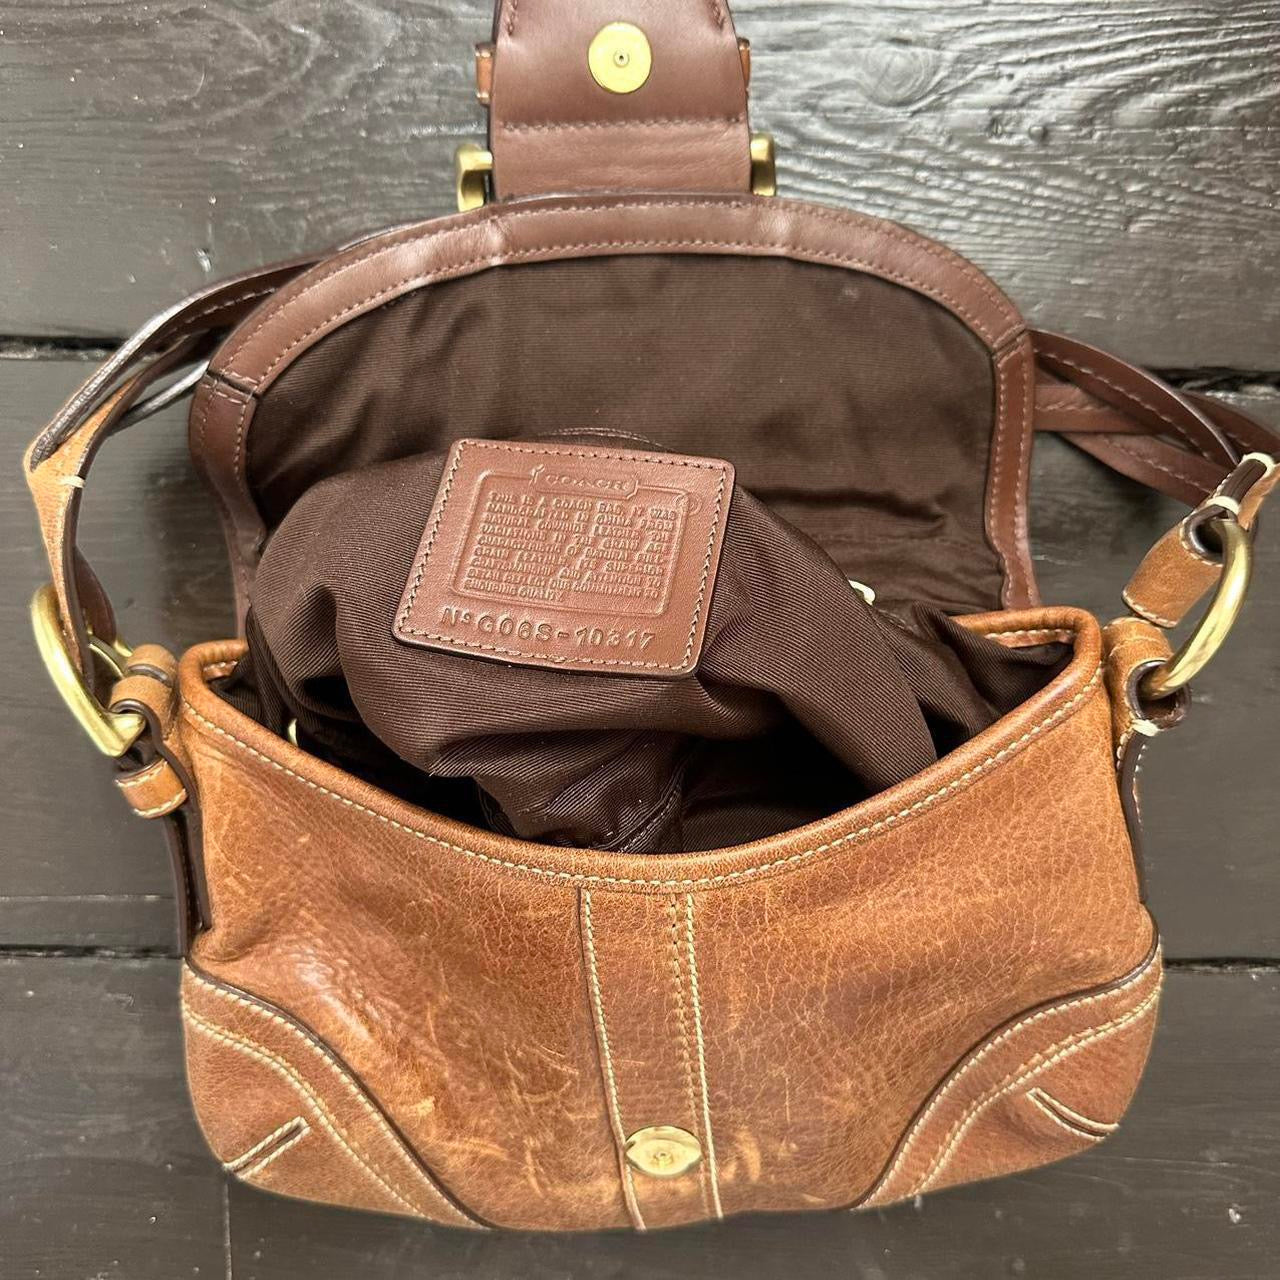 Vintage 90’s Coach brown leather bag